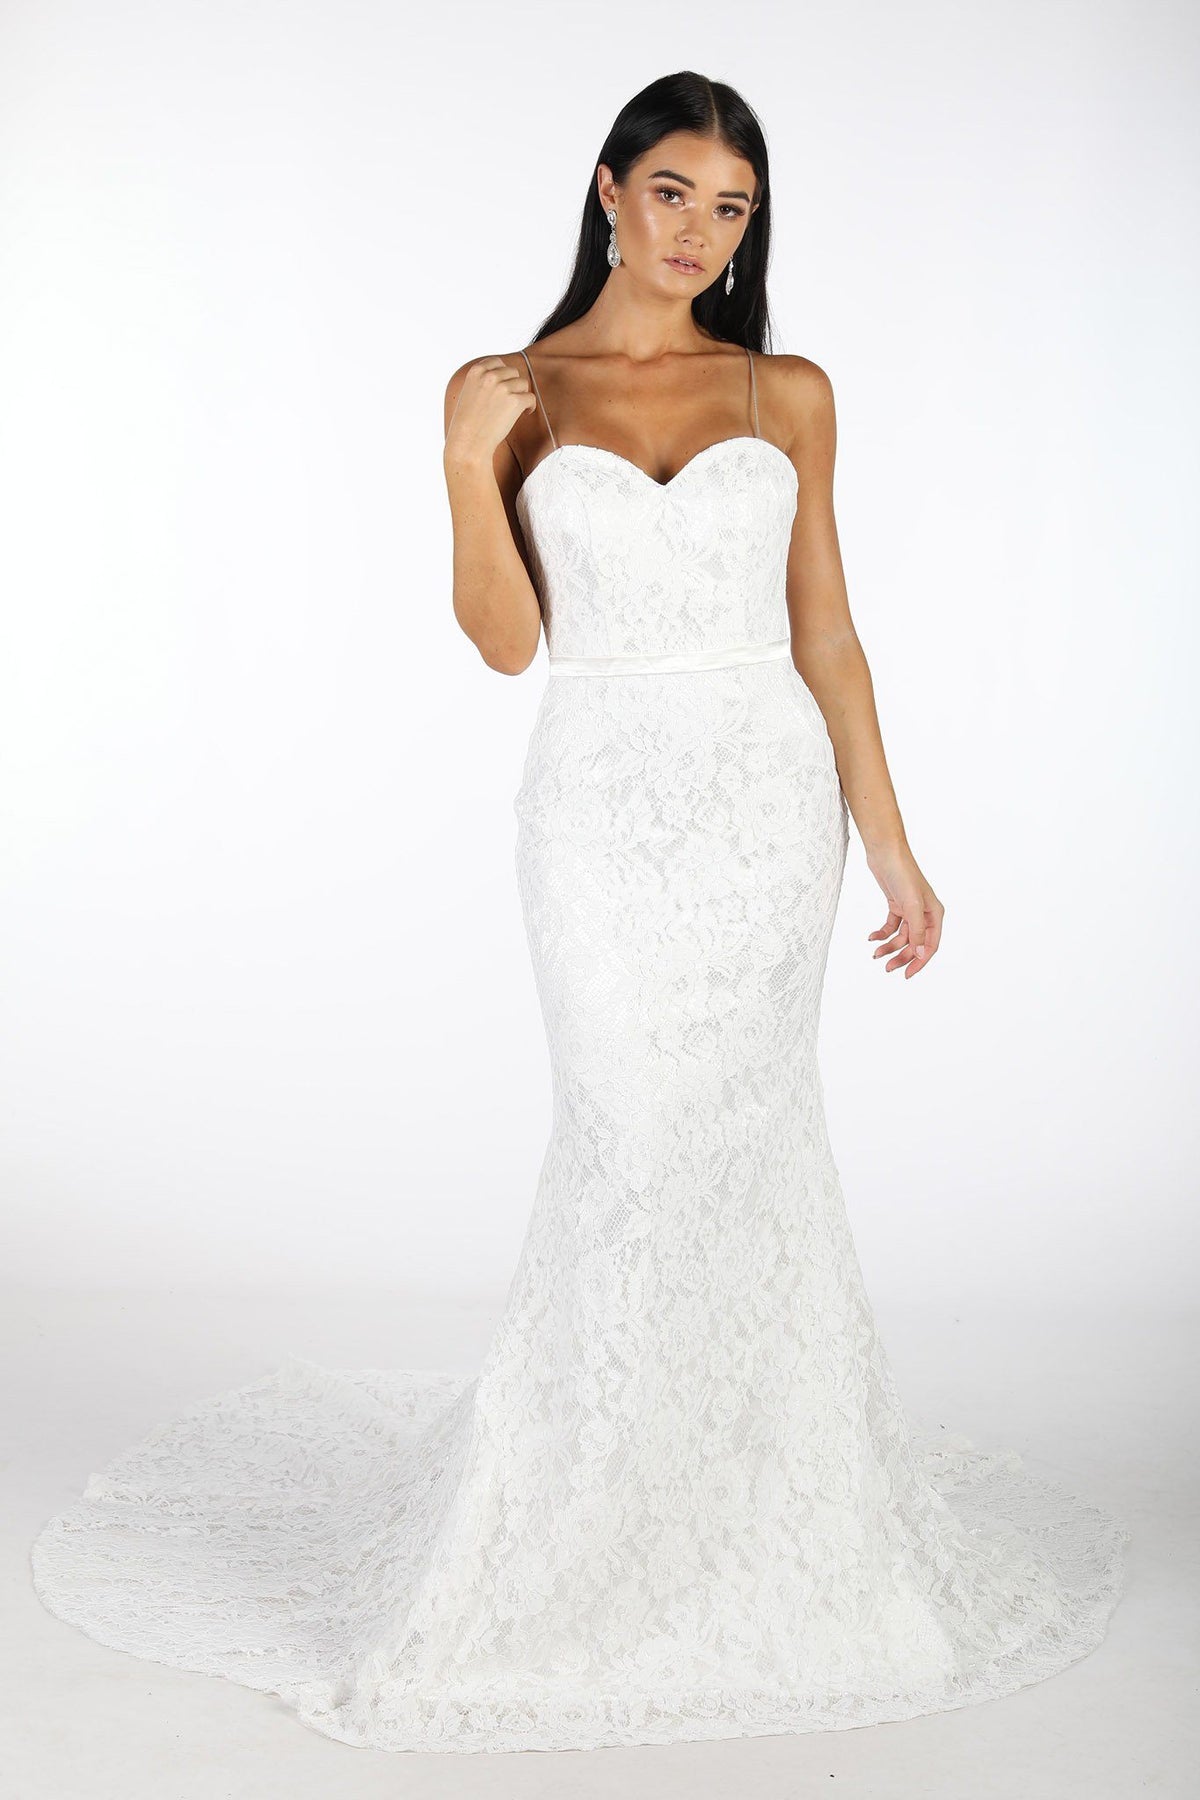 White Lace Full Length Wedding Dress with Sweetheart Neckline, Thin Spaghetti Straps, Satin Belt, Mermaid Skirt and Long Train